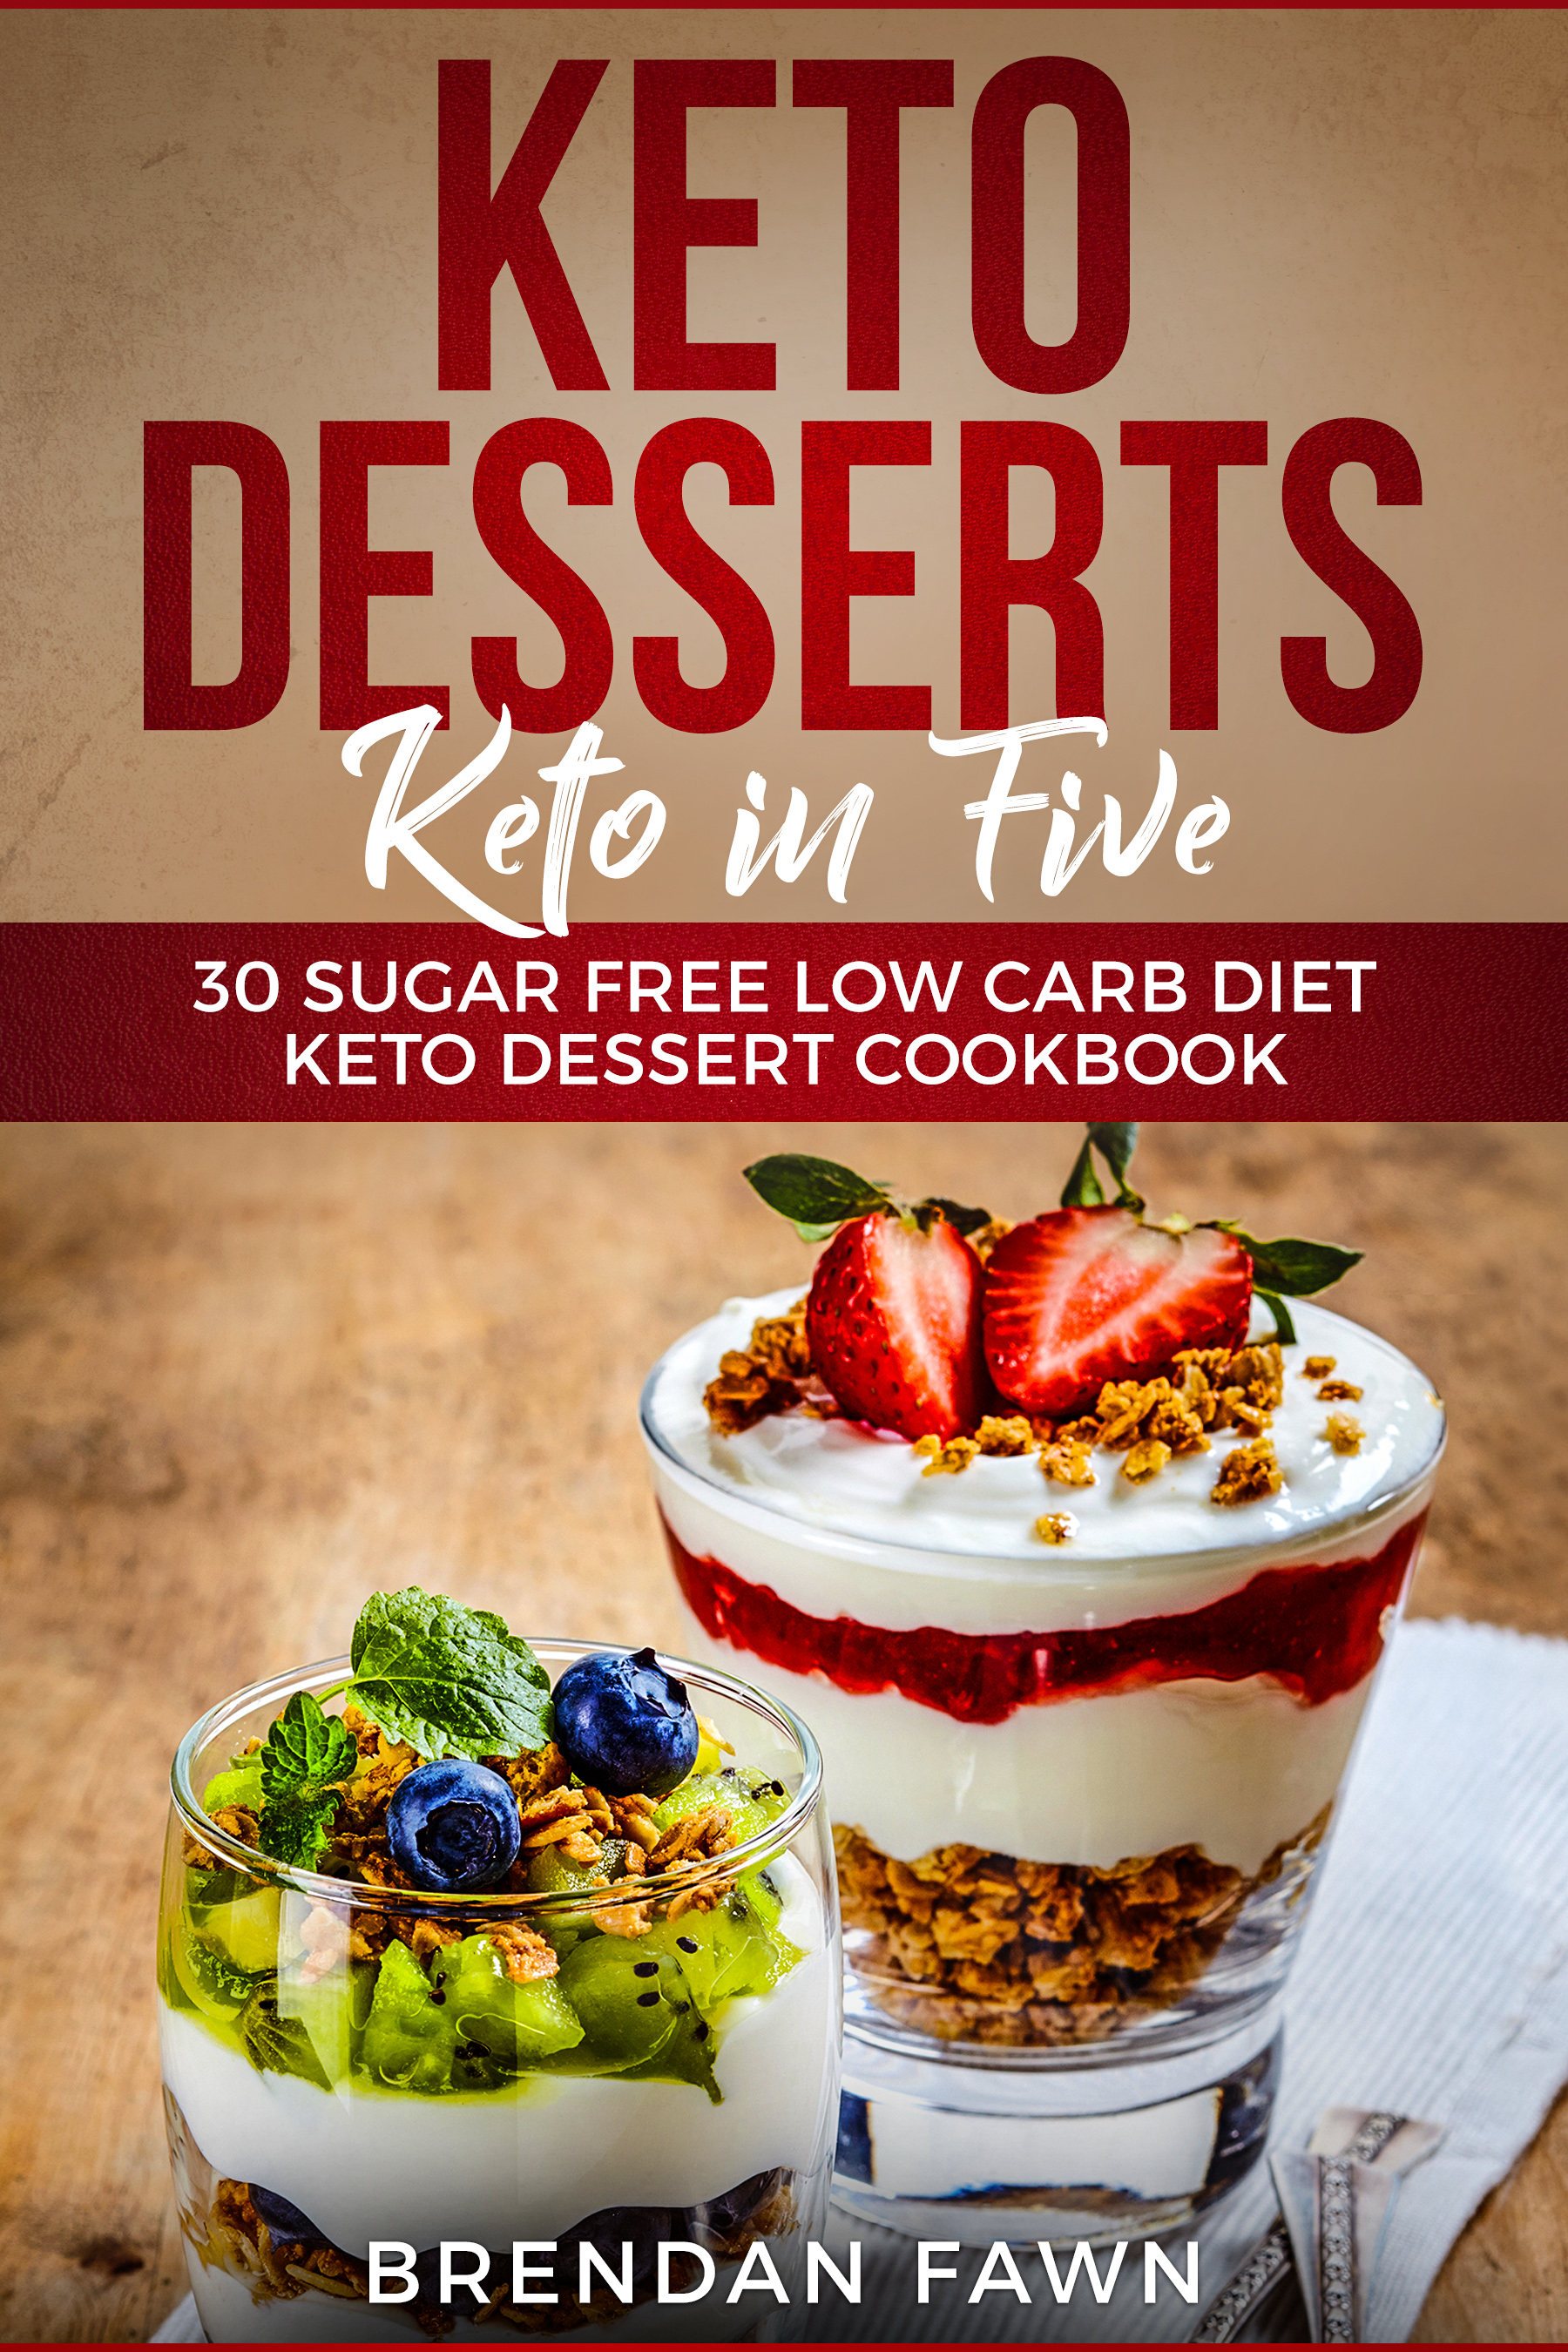 FREE: Keto Desserts: Keto in Five by Brendan Fawn